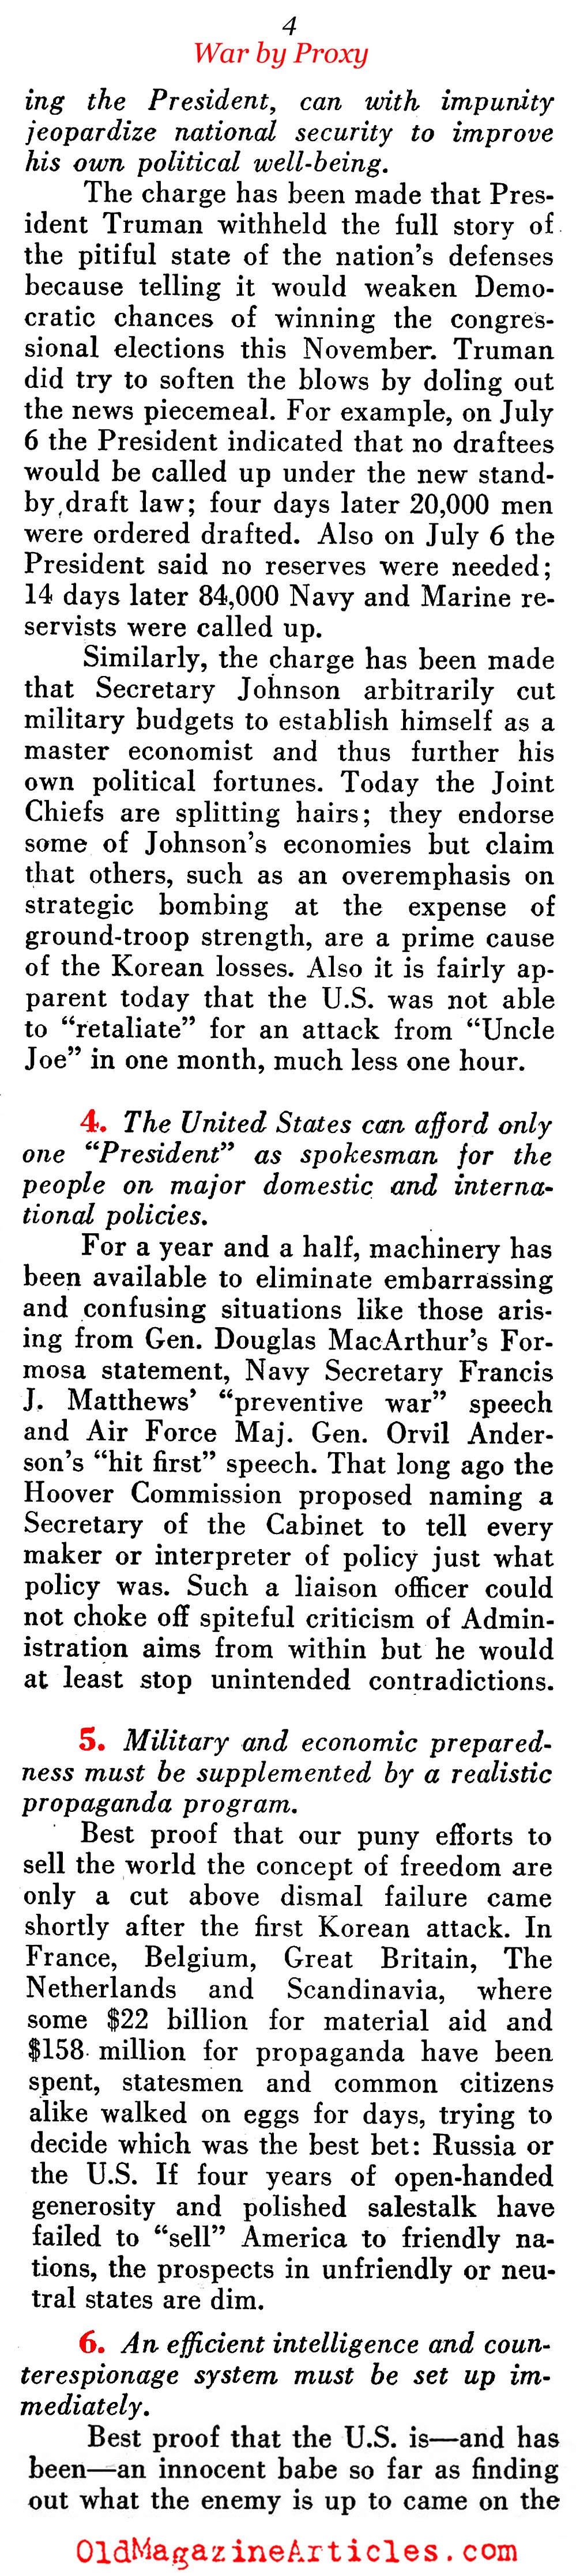 The Proxy Wars (Pathfinder Magazine, 1950)